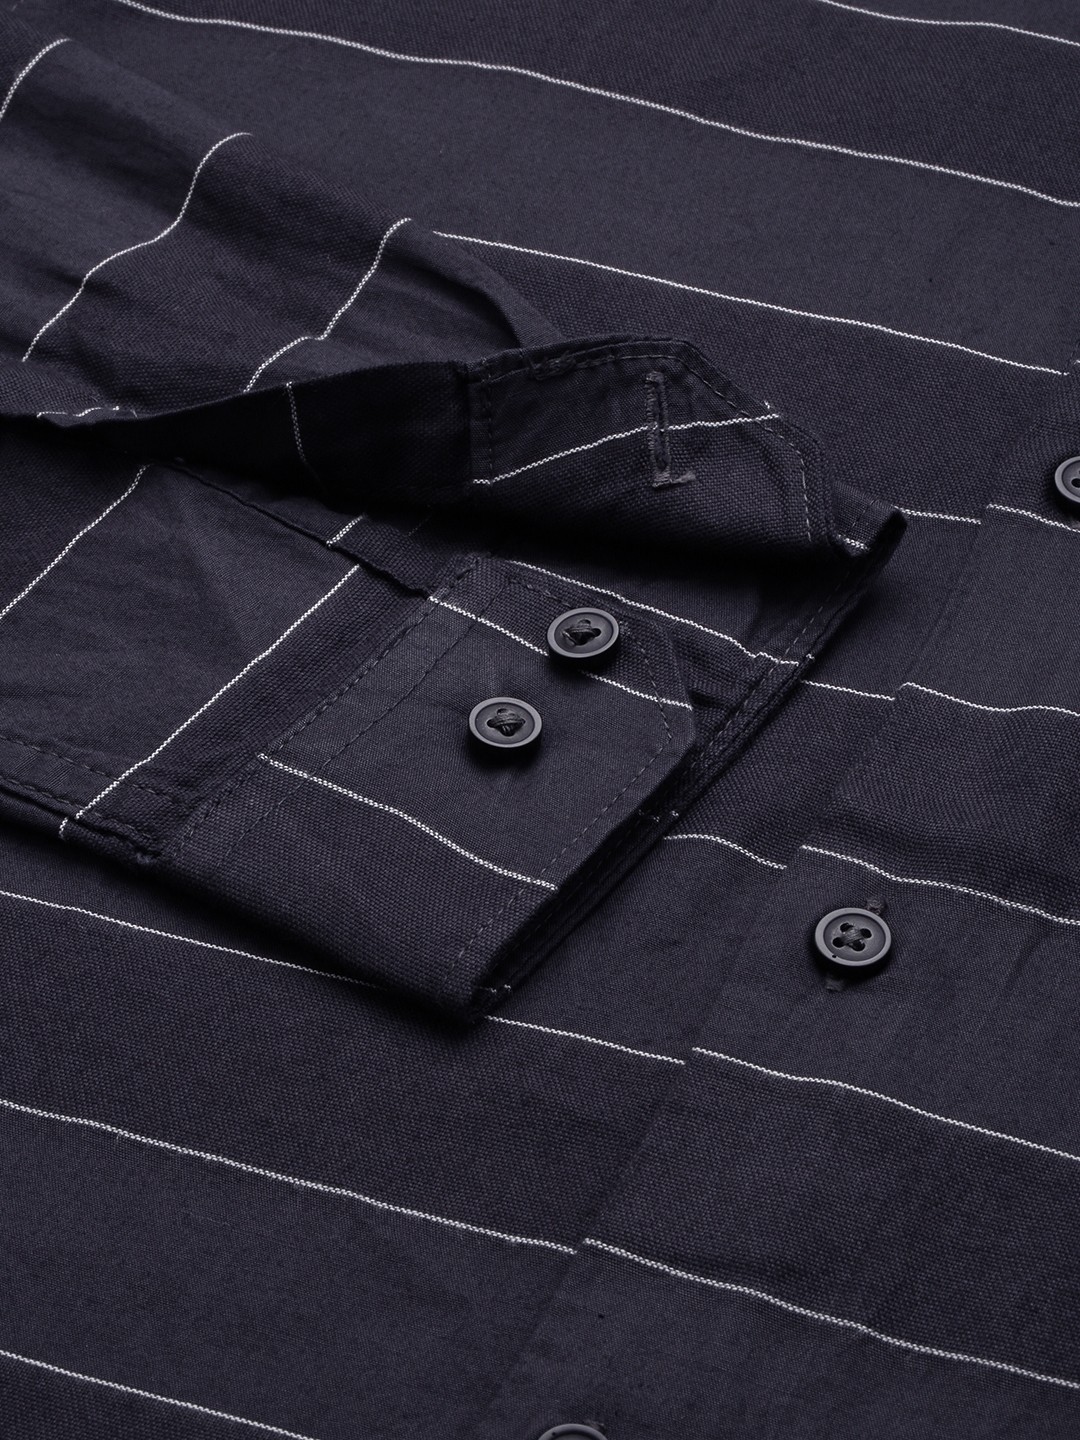 SHOWOFF Men's Spread Collar Black Self Design Shirt